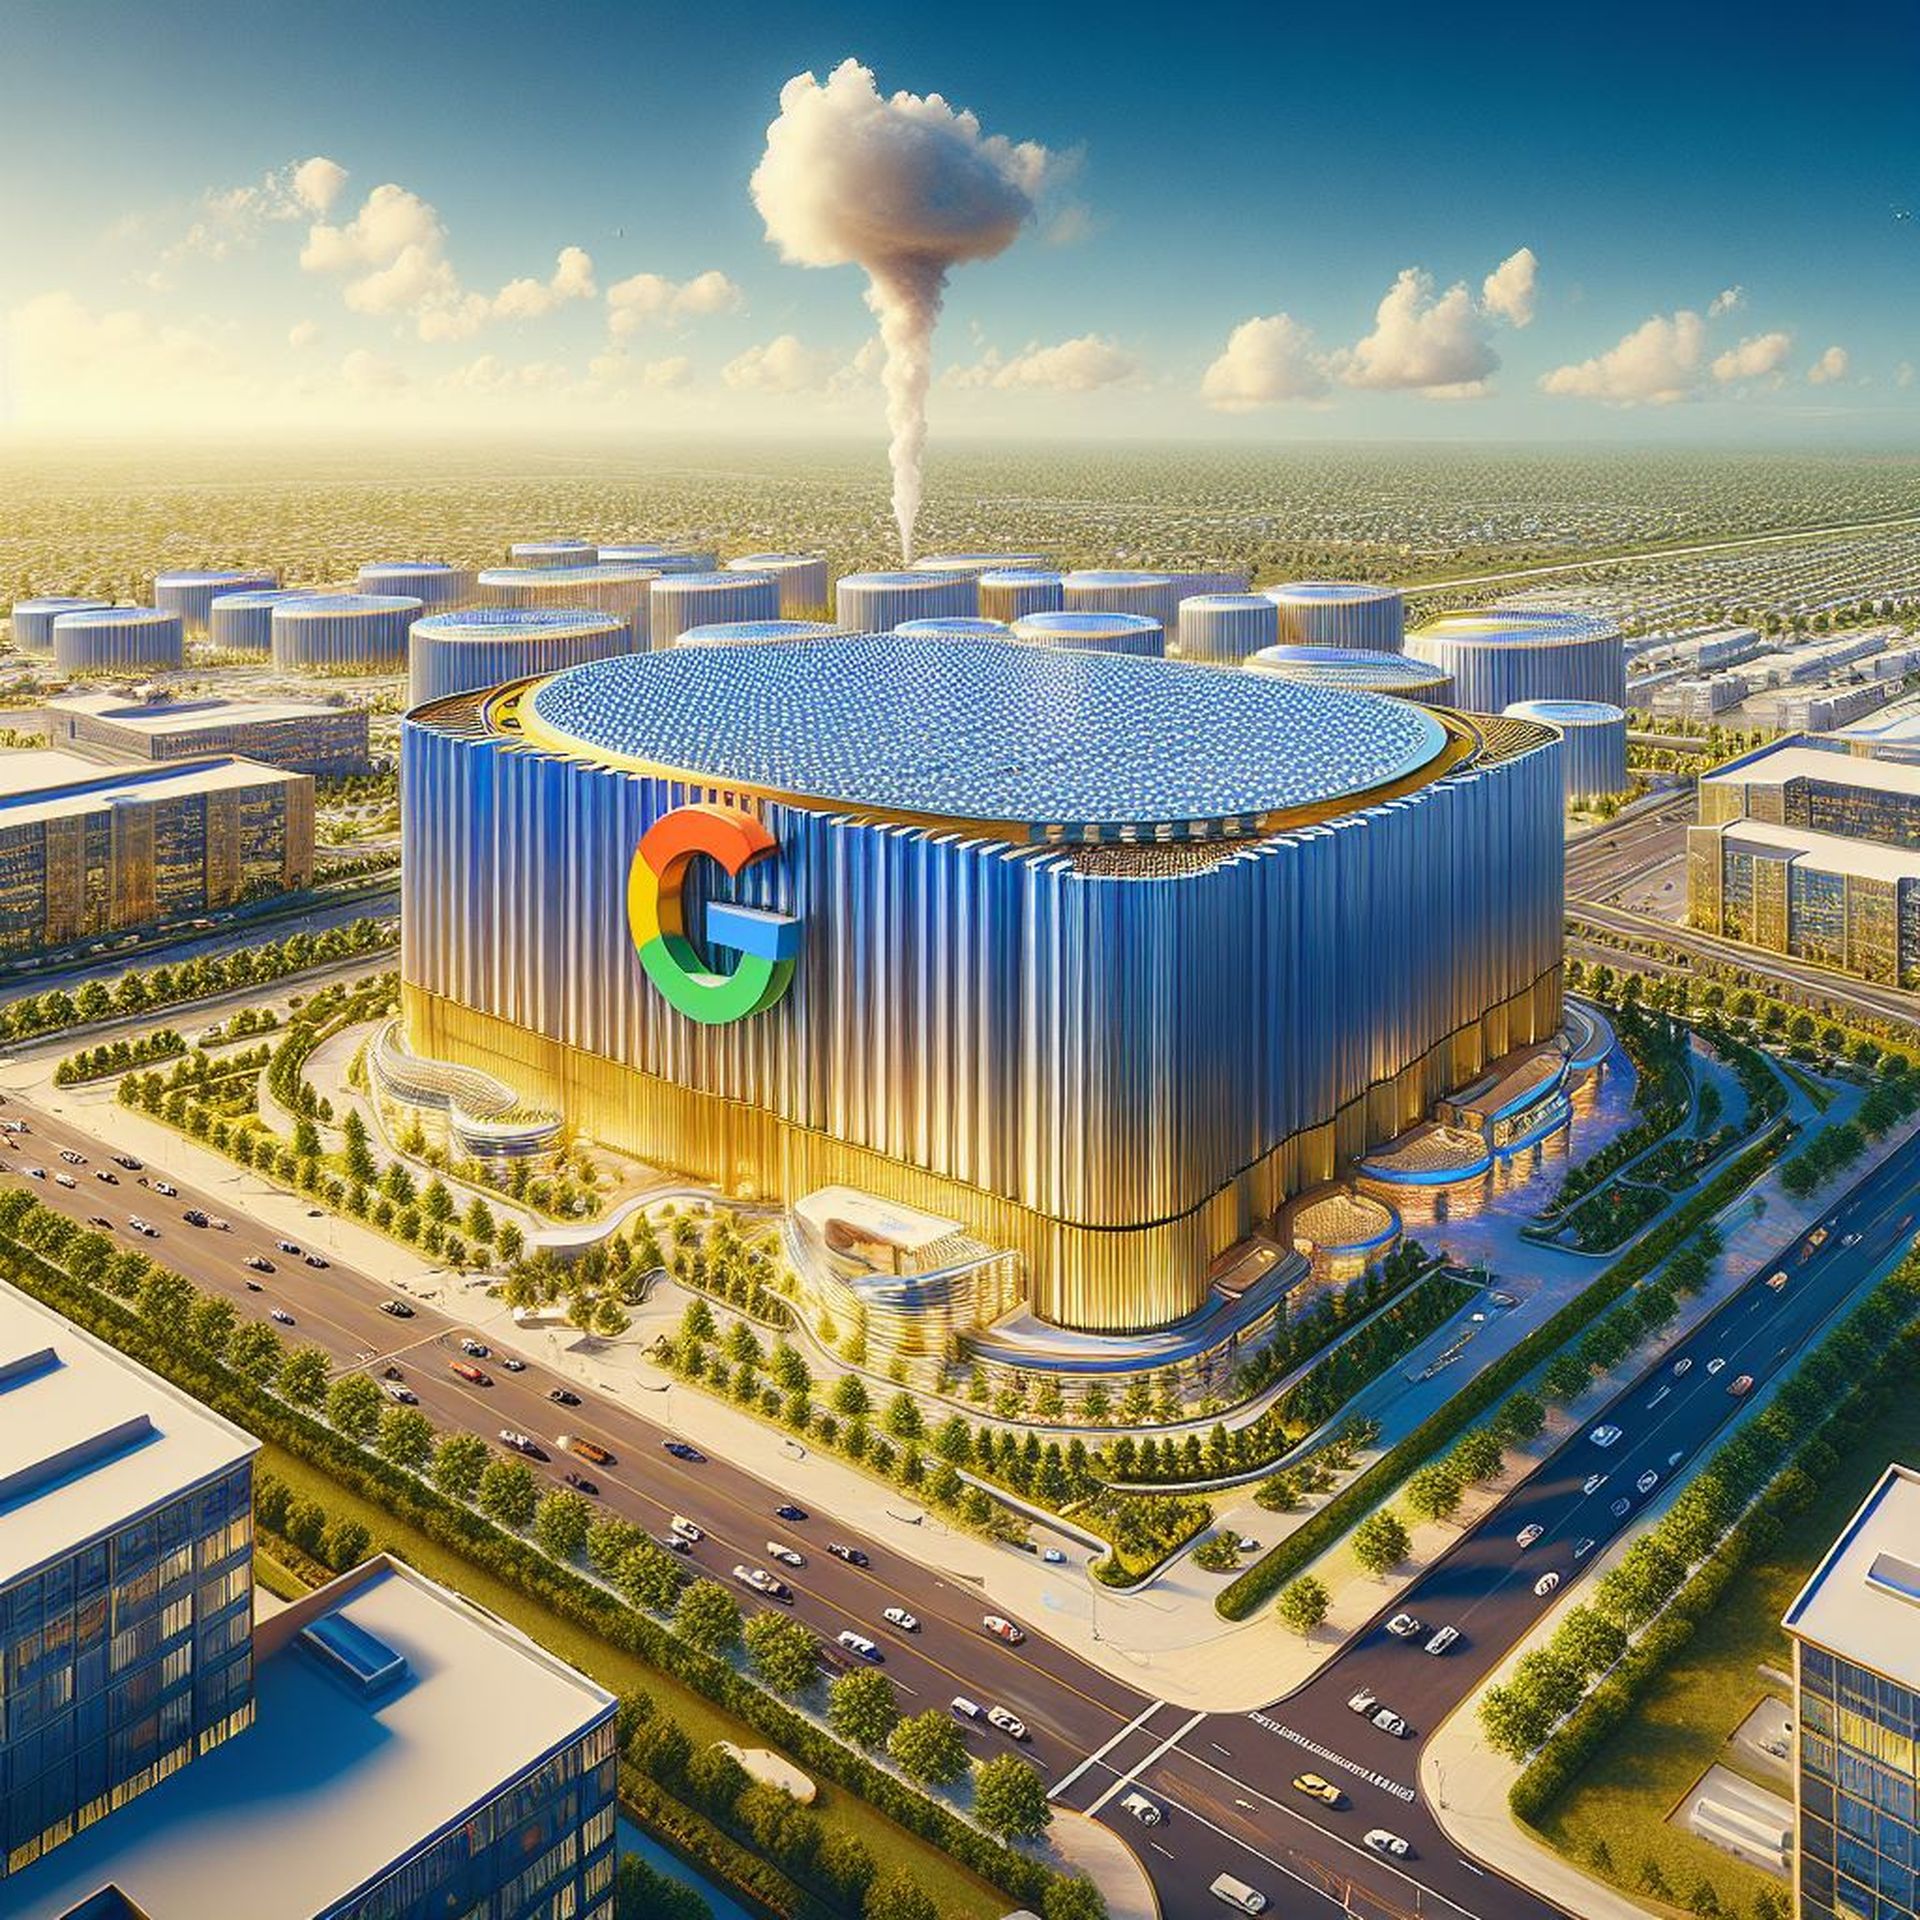 Google is building a $1bn data center in Kansas City